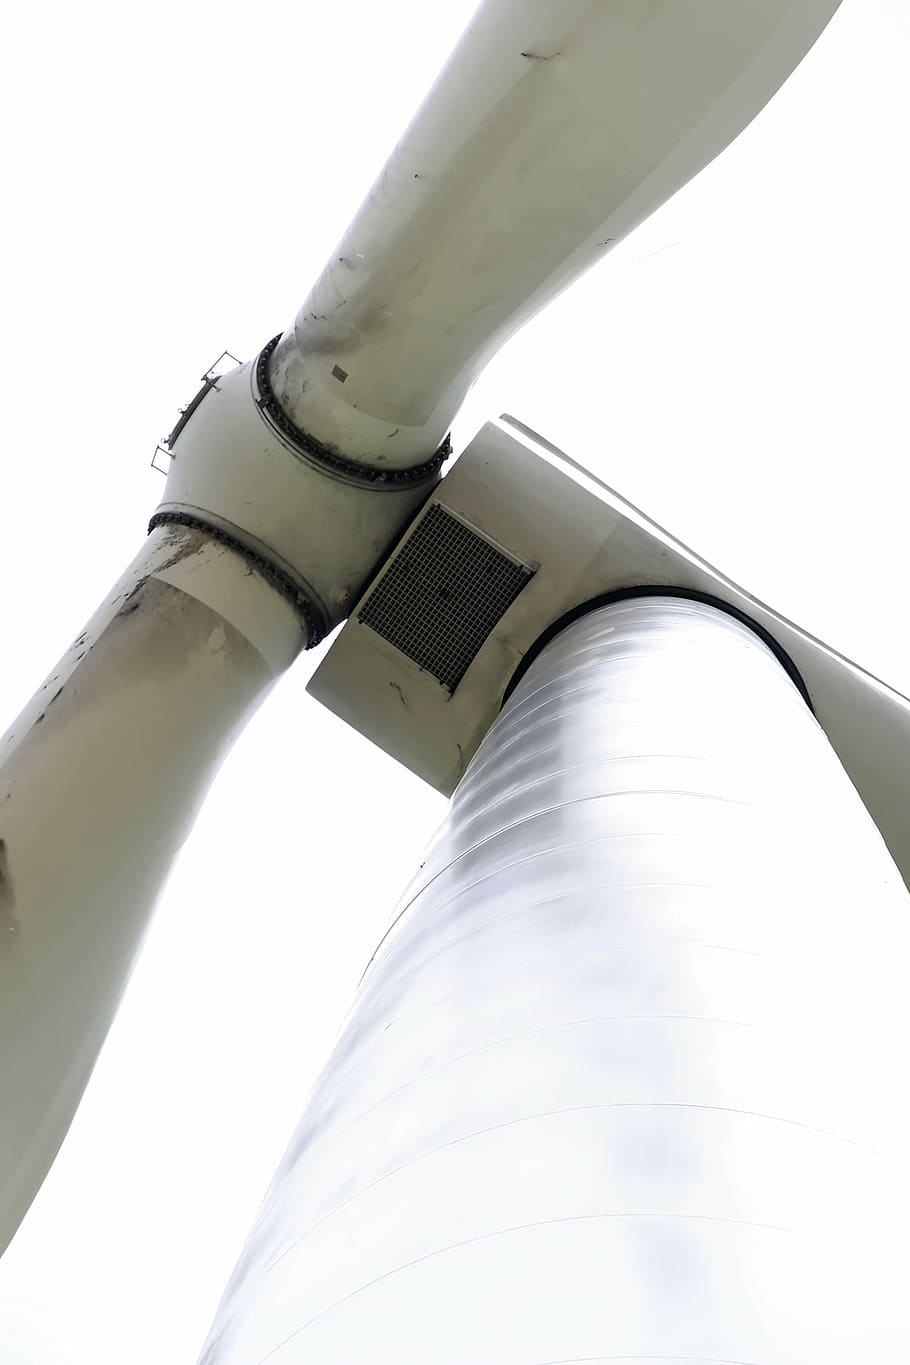 pinwheel, energy revolution, wind energy, wind turbine, windräder, wind power, current, renewable energy, rotor, environmentally friendly